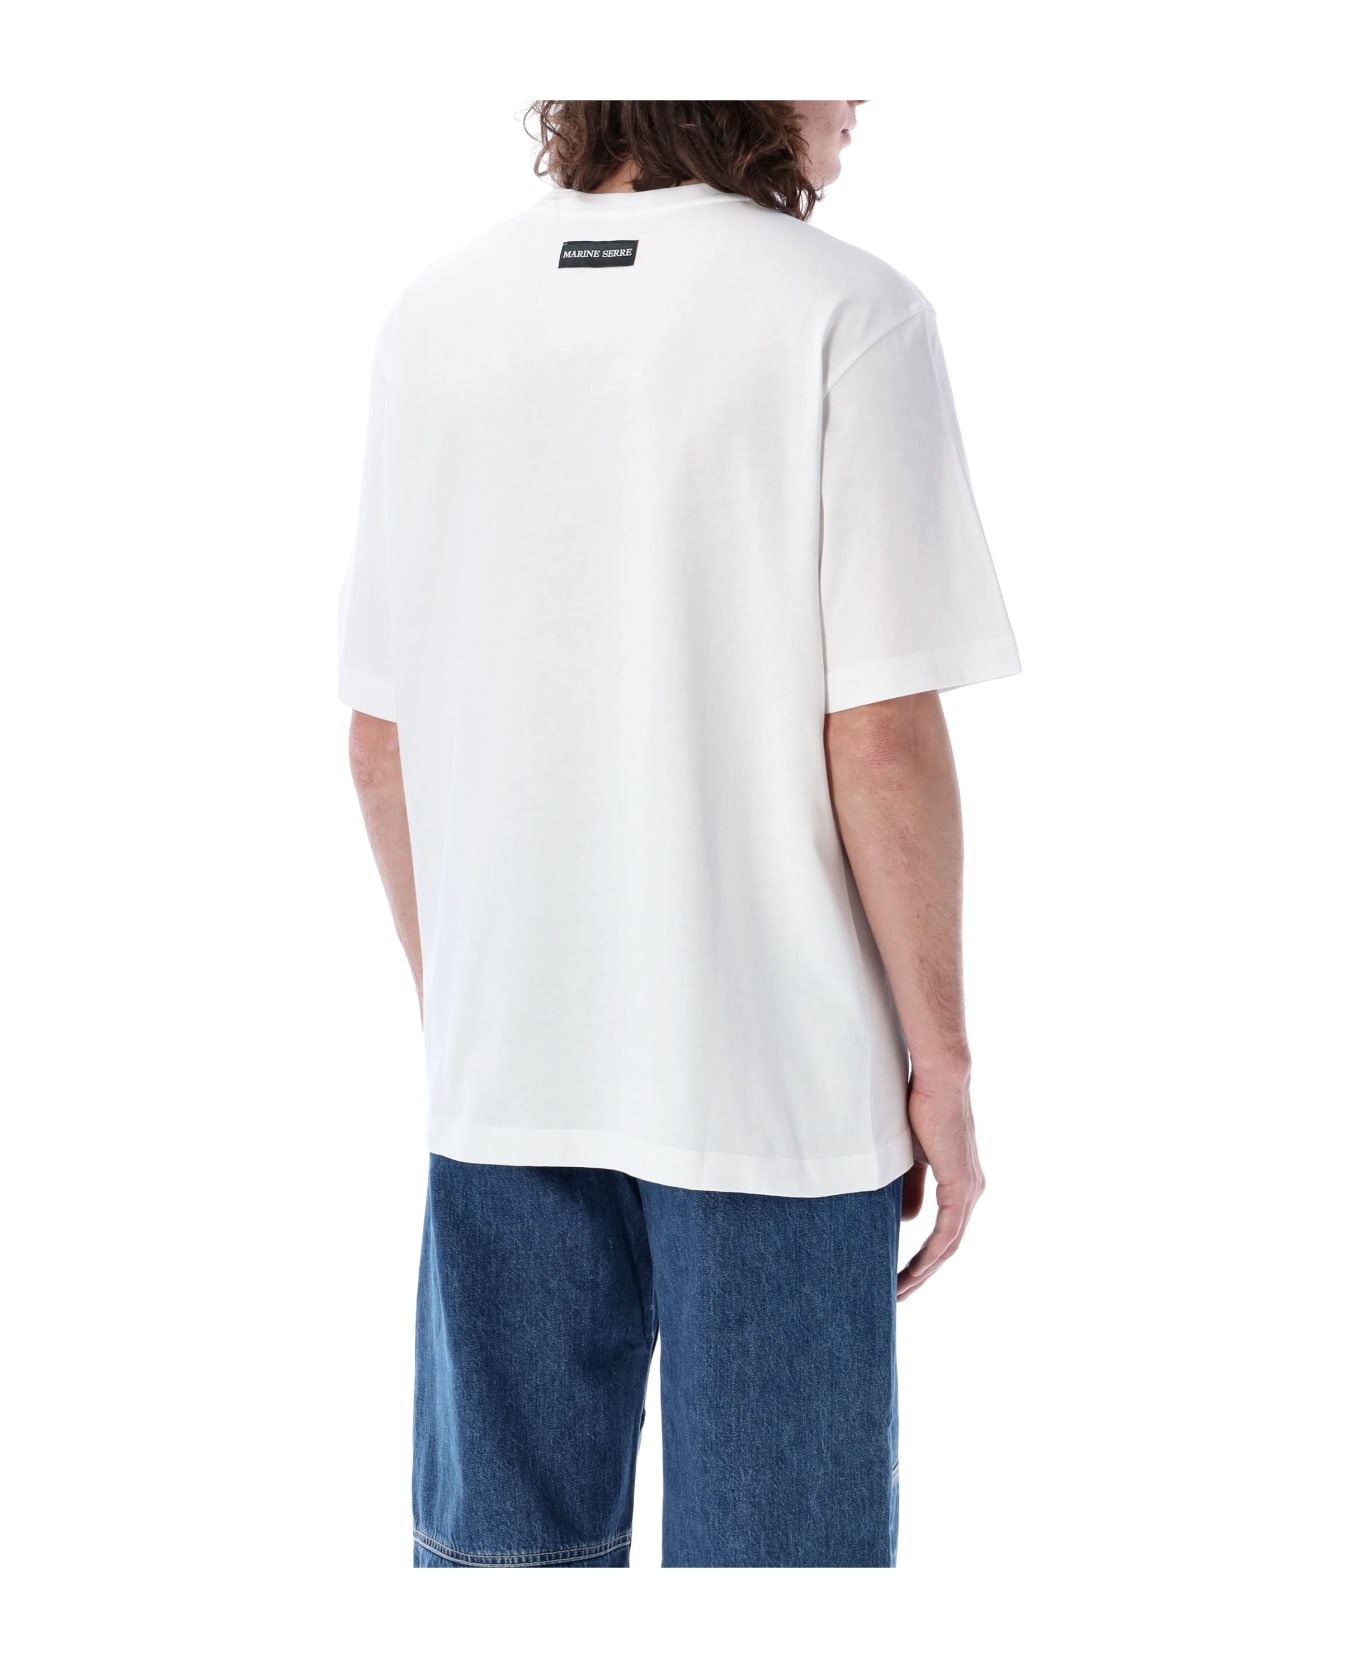 Marine Serre Organic Cotton Jersey Plain T-shirt - White